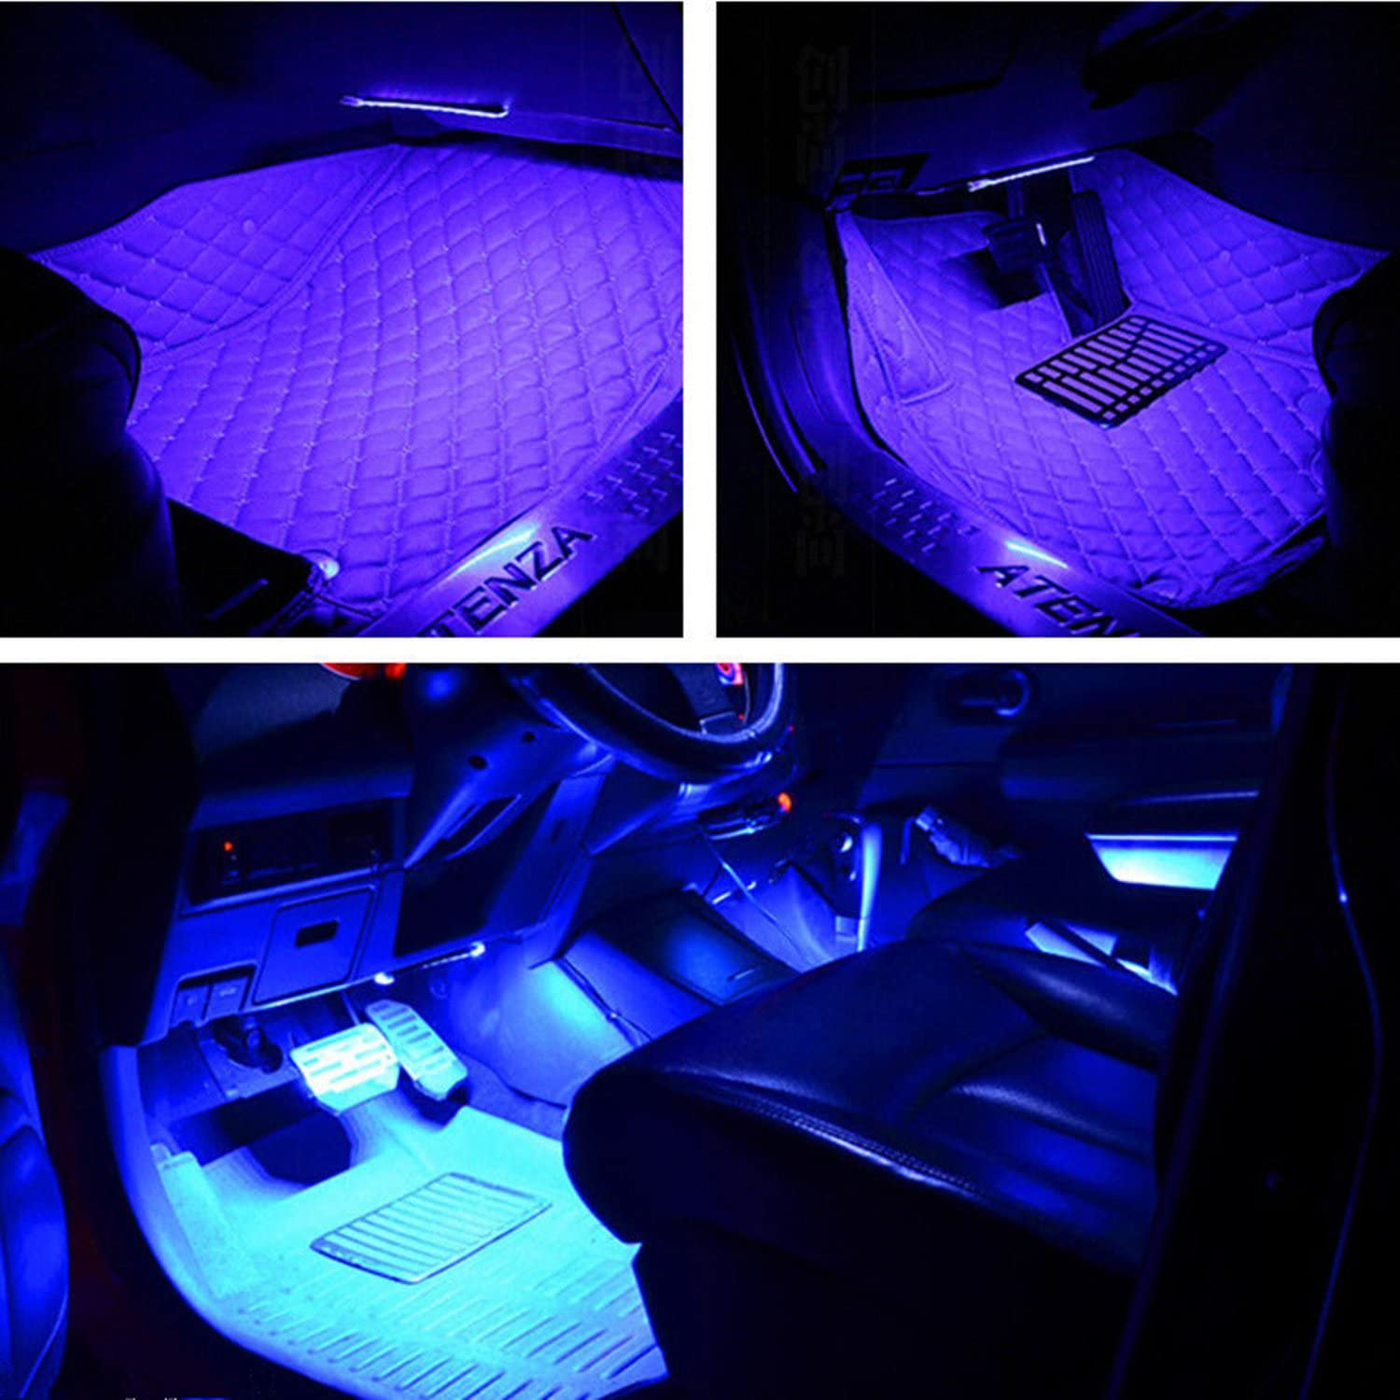 RGB Interior Car Lights, 2-in-1 Design 4pcs 48 LED App Control, Remote Control, Music Mode, DIY Mode, Scene Mode, DC 12V